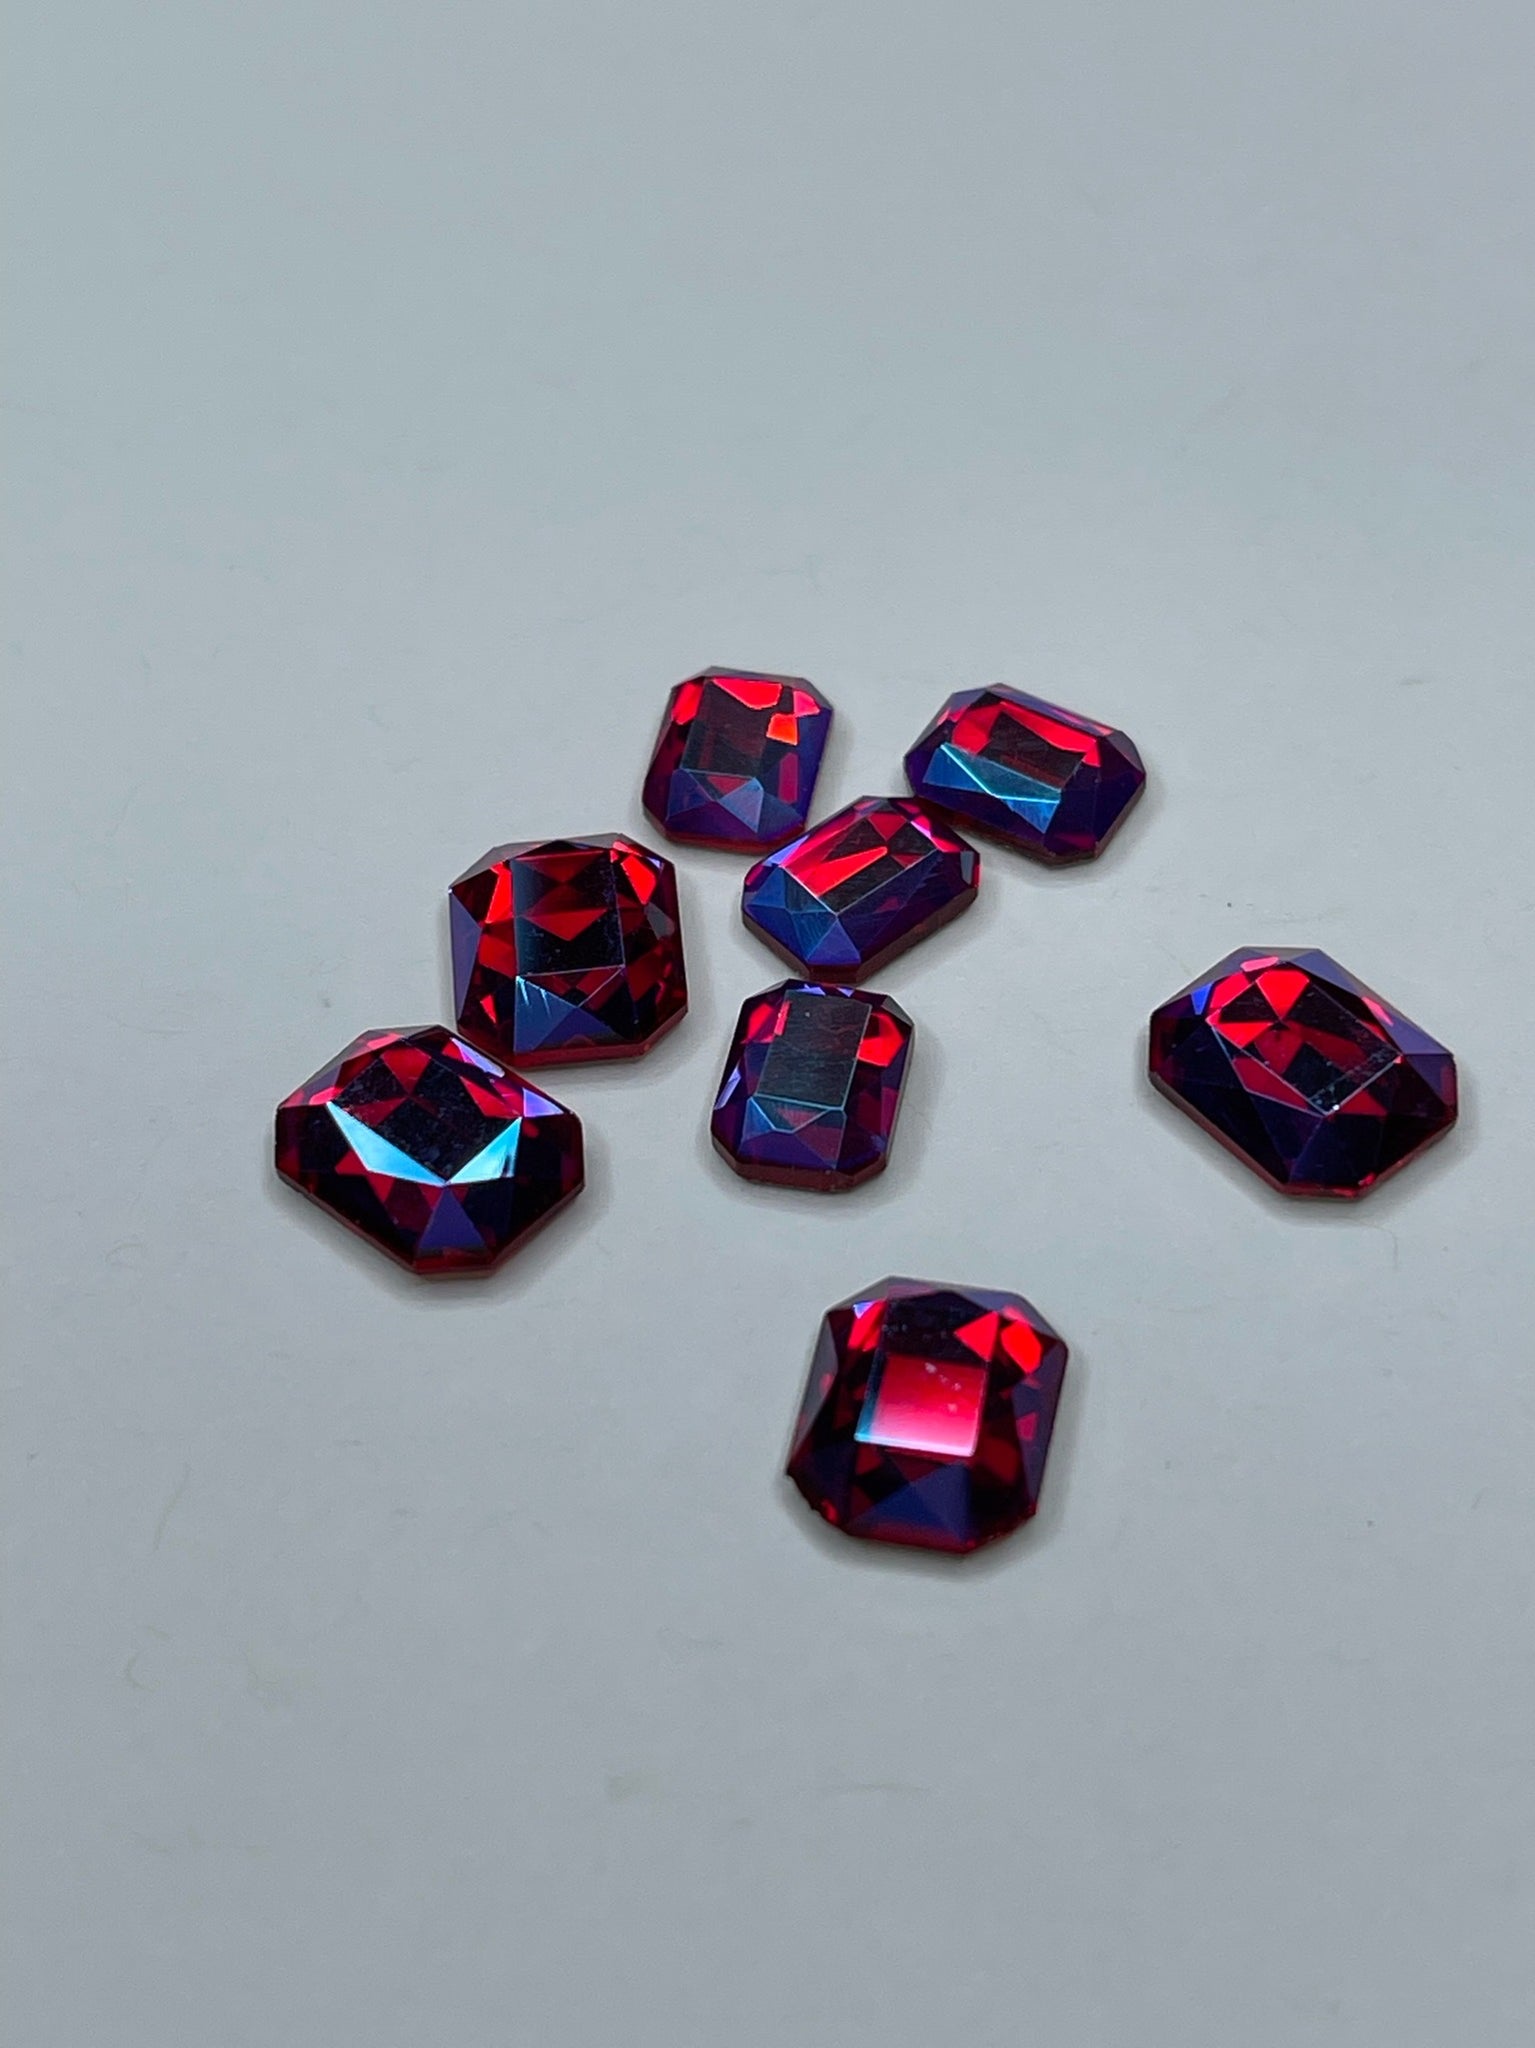 High Quality Crystals - Scarlet AB